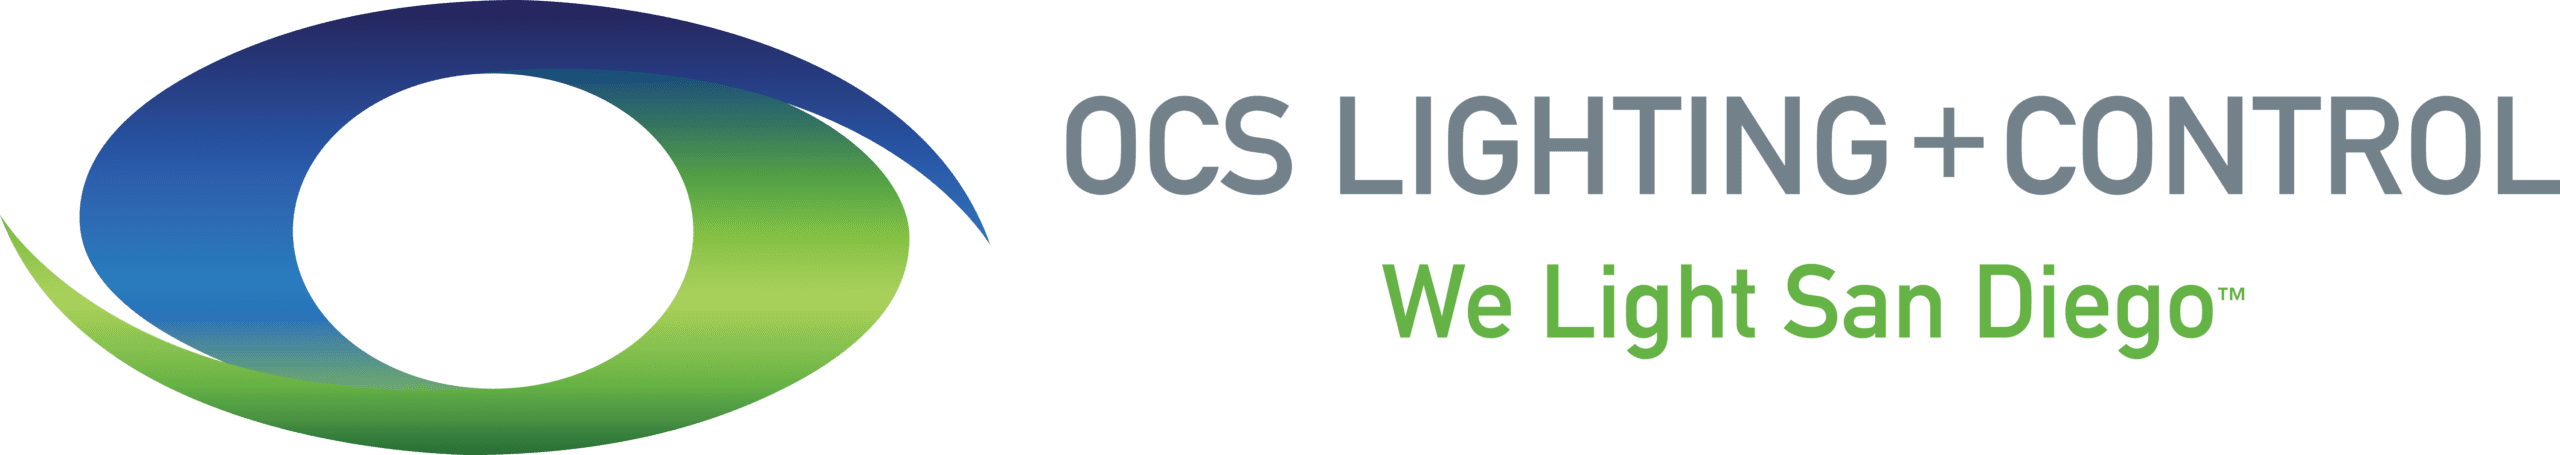 Lighting & Controls in Diego | Lighting Manufacturer Rep